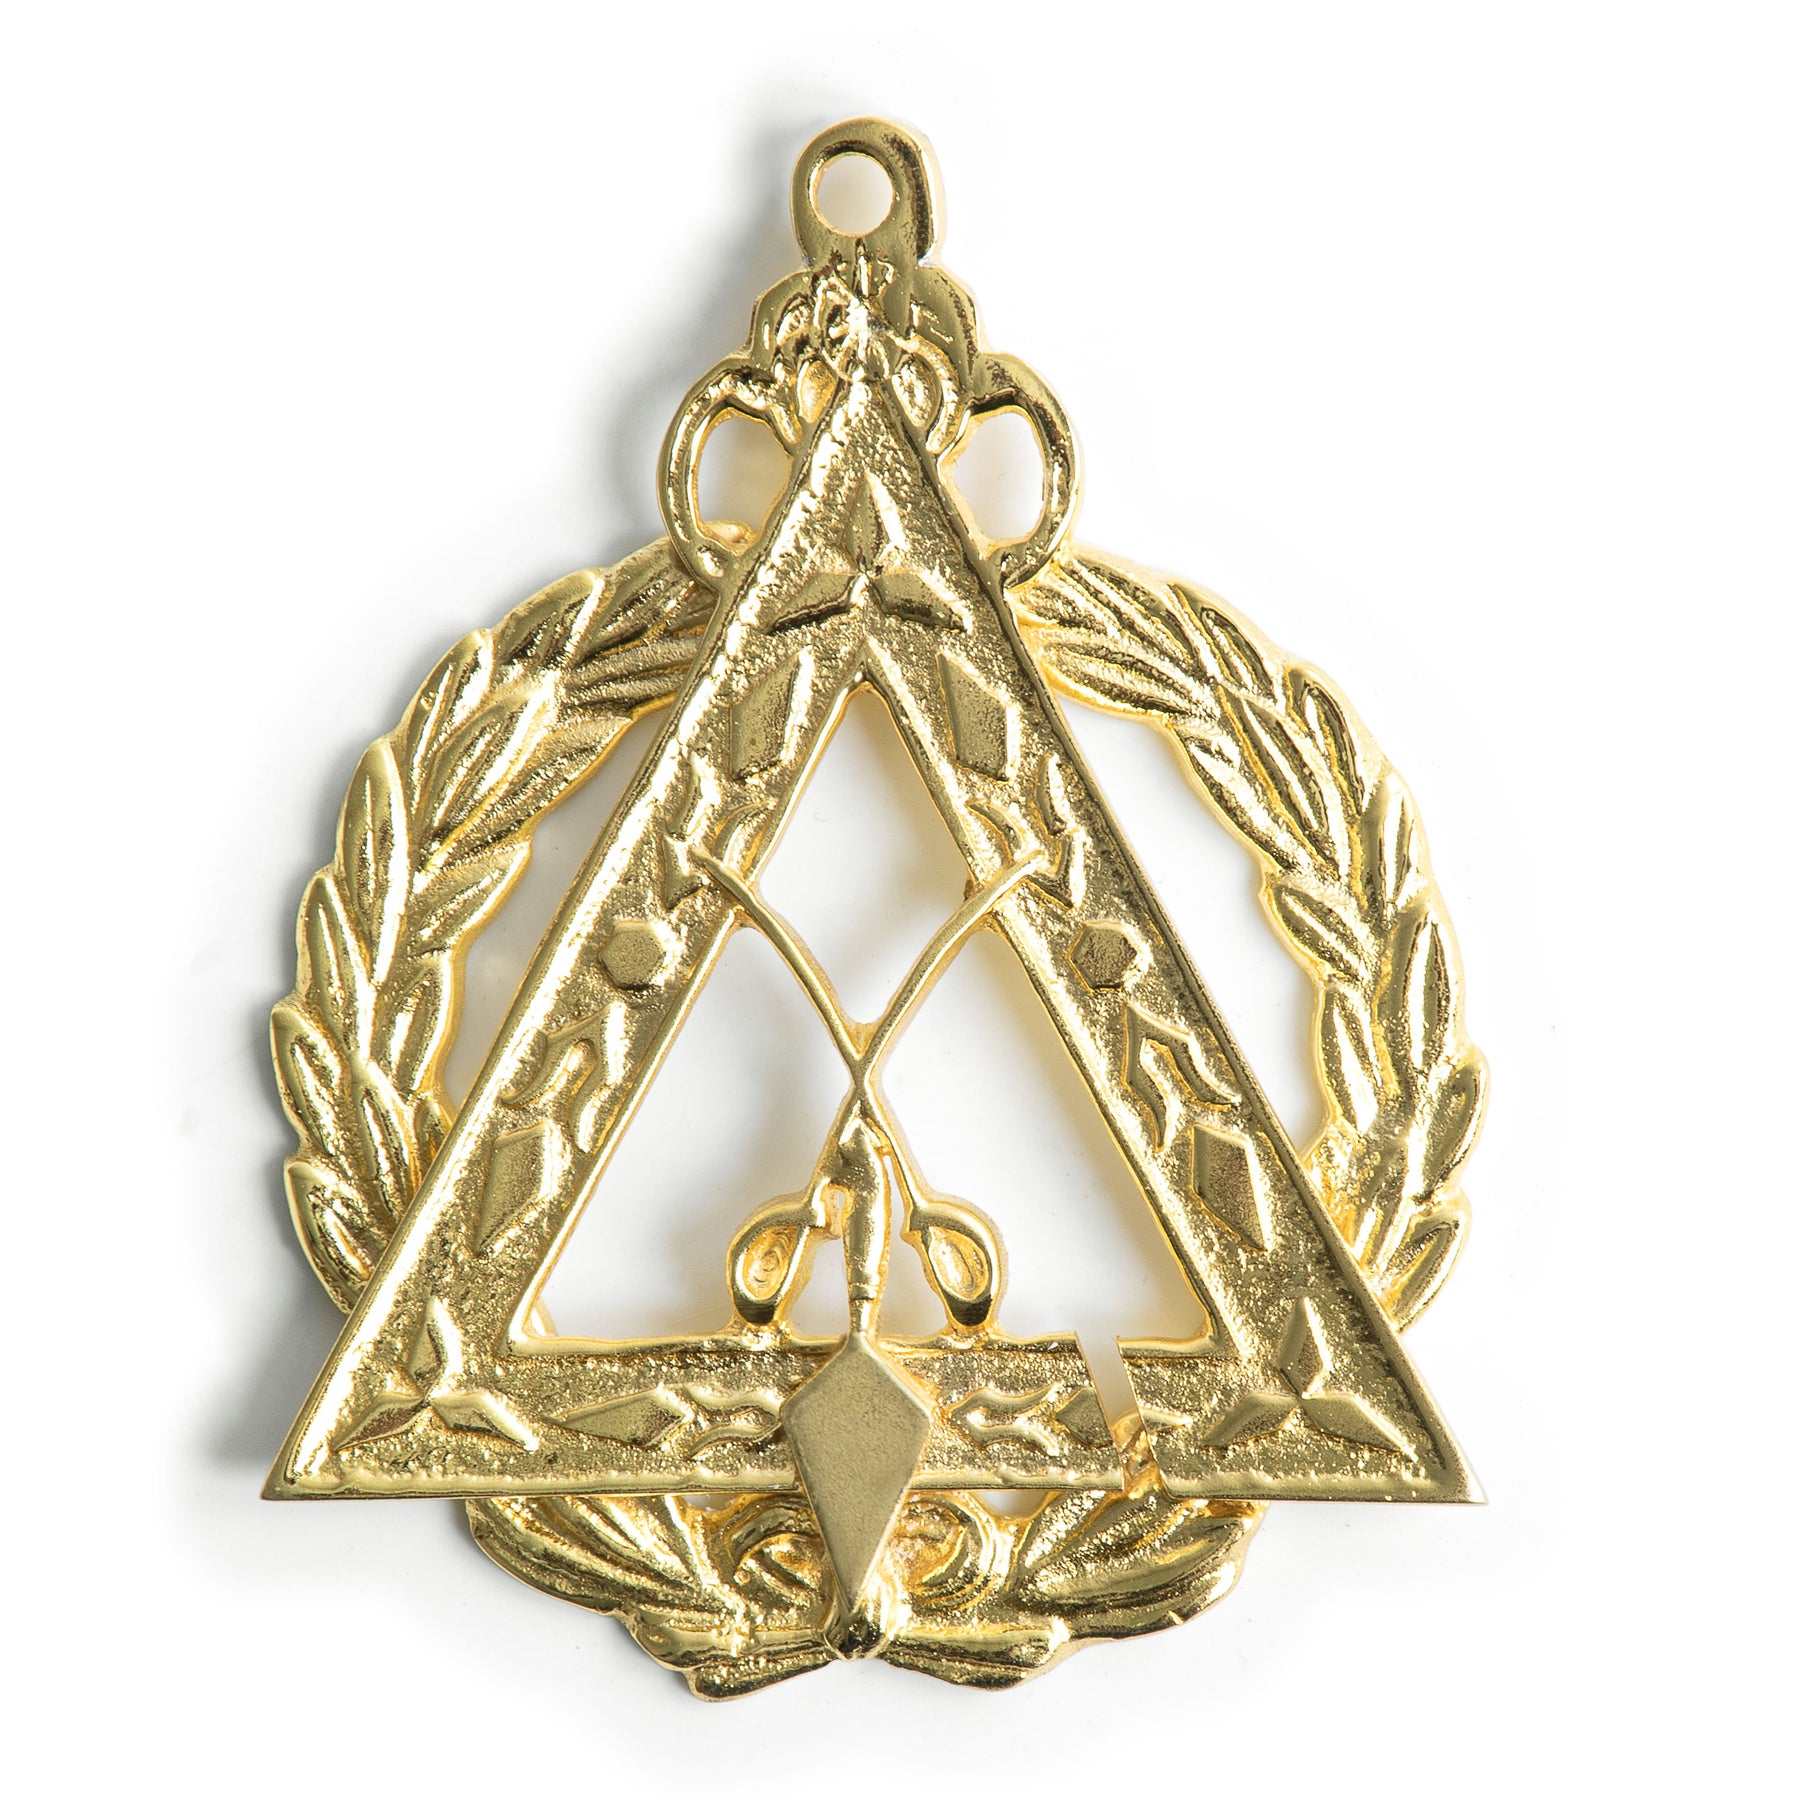 Grand Sentinel Royal & Select Masters Officer Collar Jewel - Gold Plated - Bricks Masons